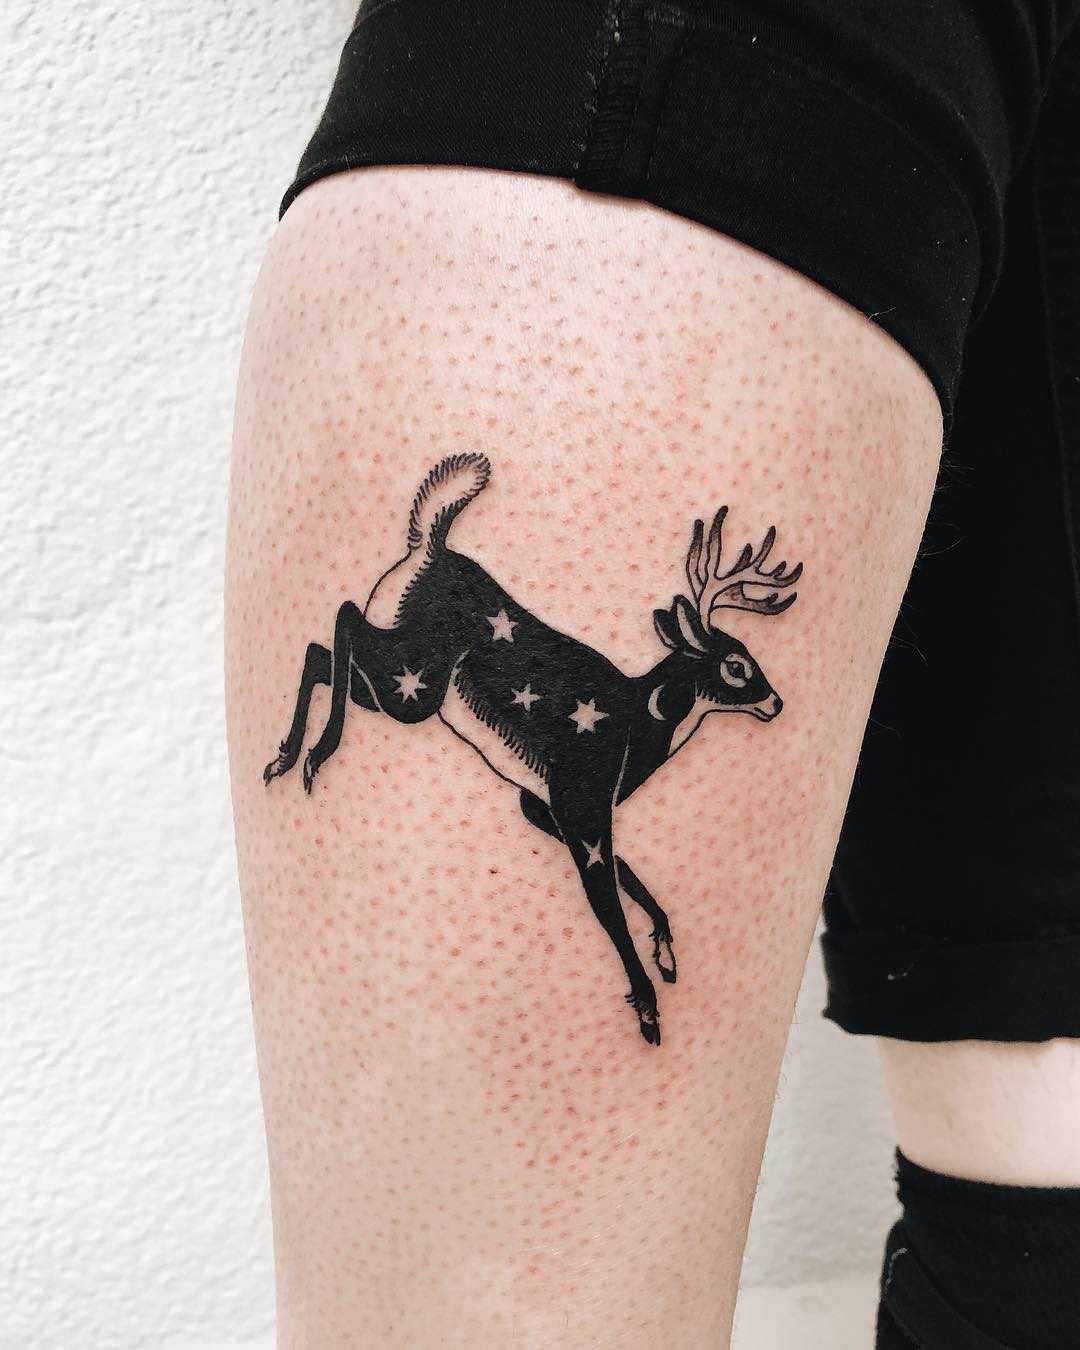 Jumping deer tattoo on the calf